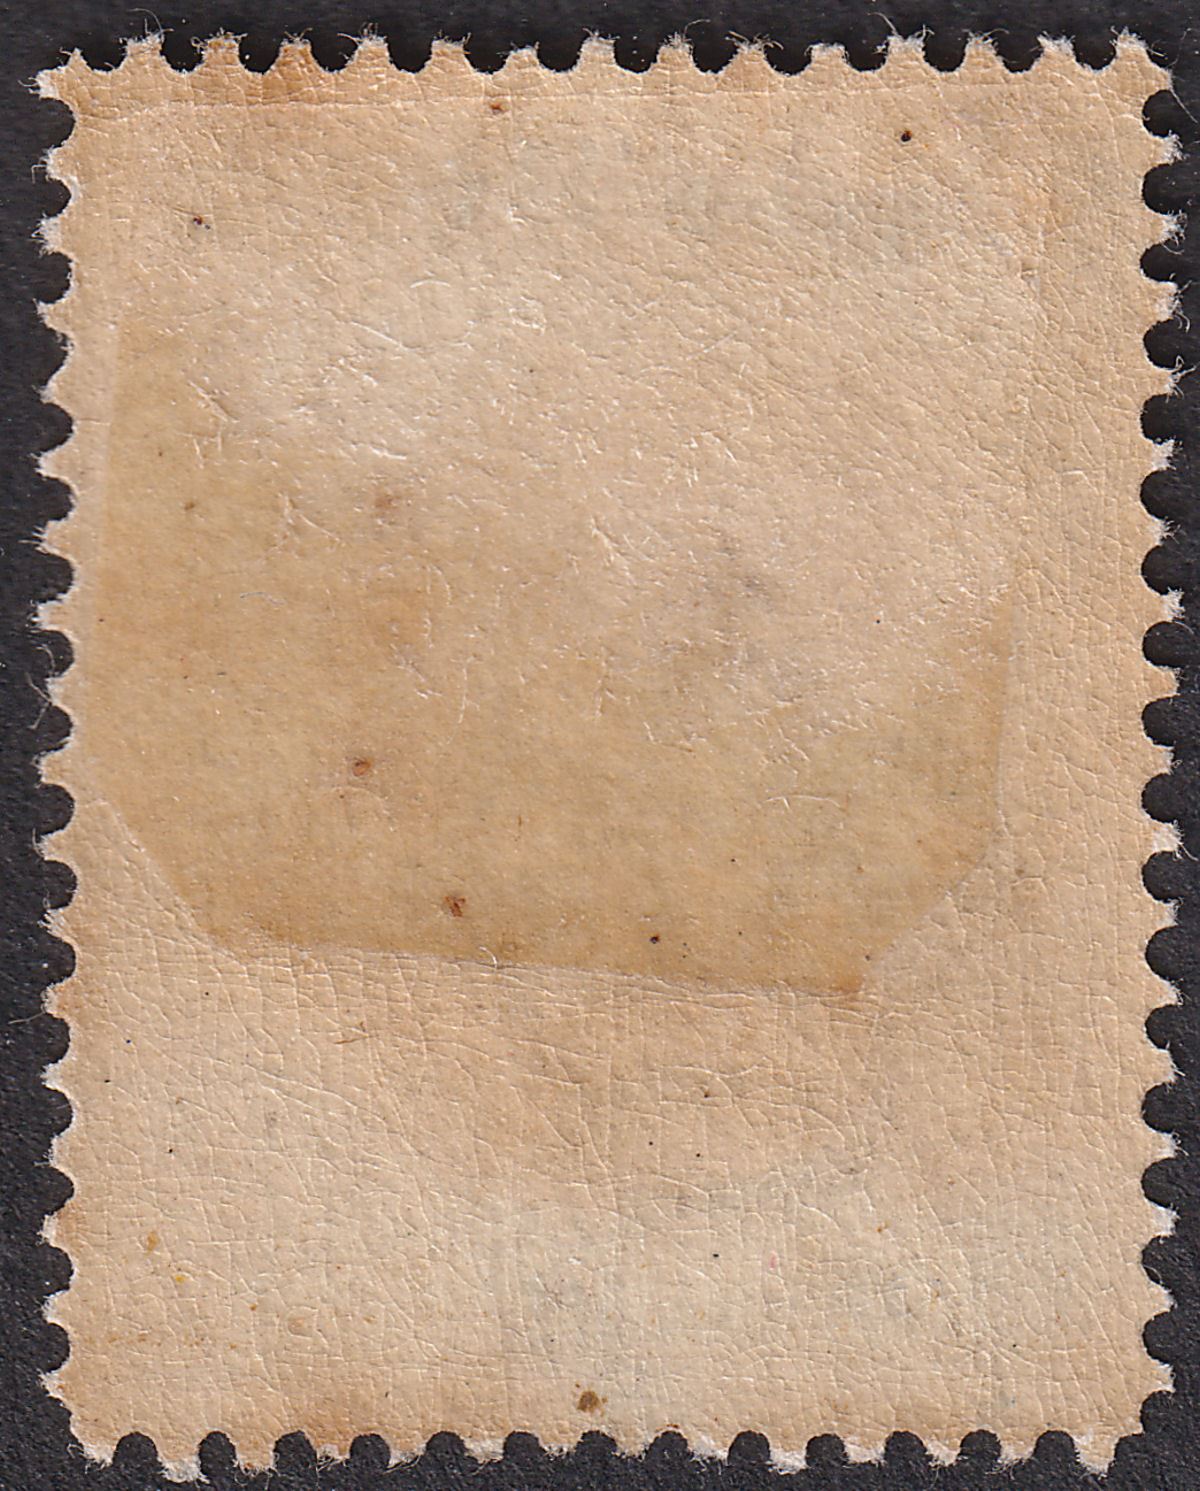 Falkland Islands 1896 QV 1sh Yellow-Brown Mint SG38 cat £75 toned